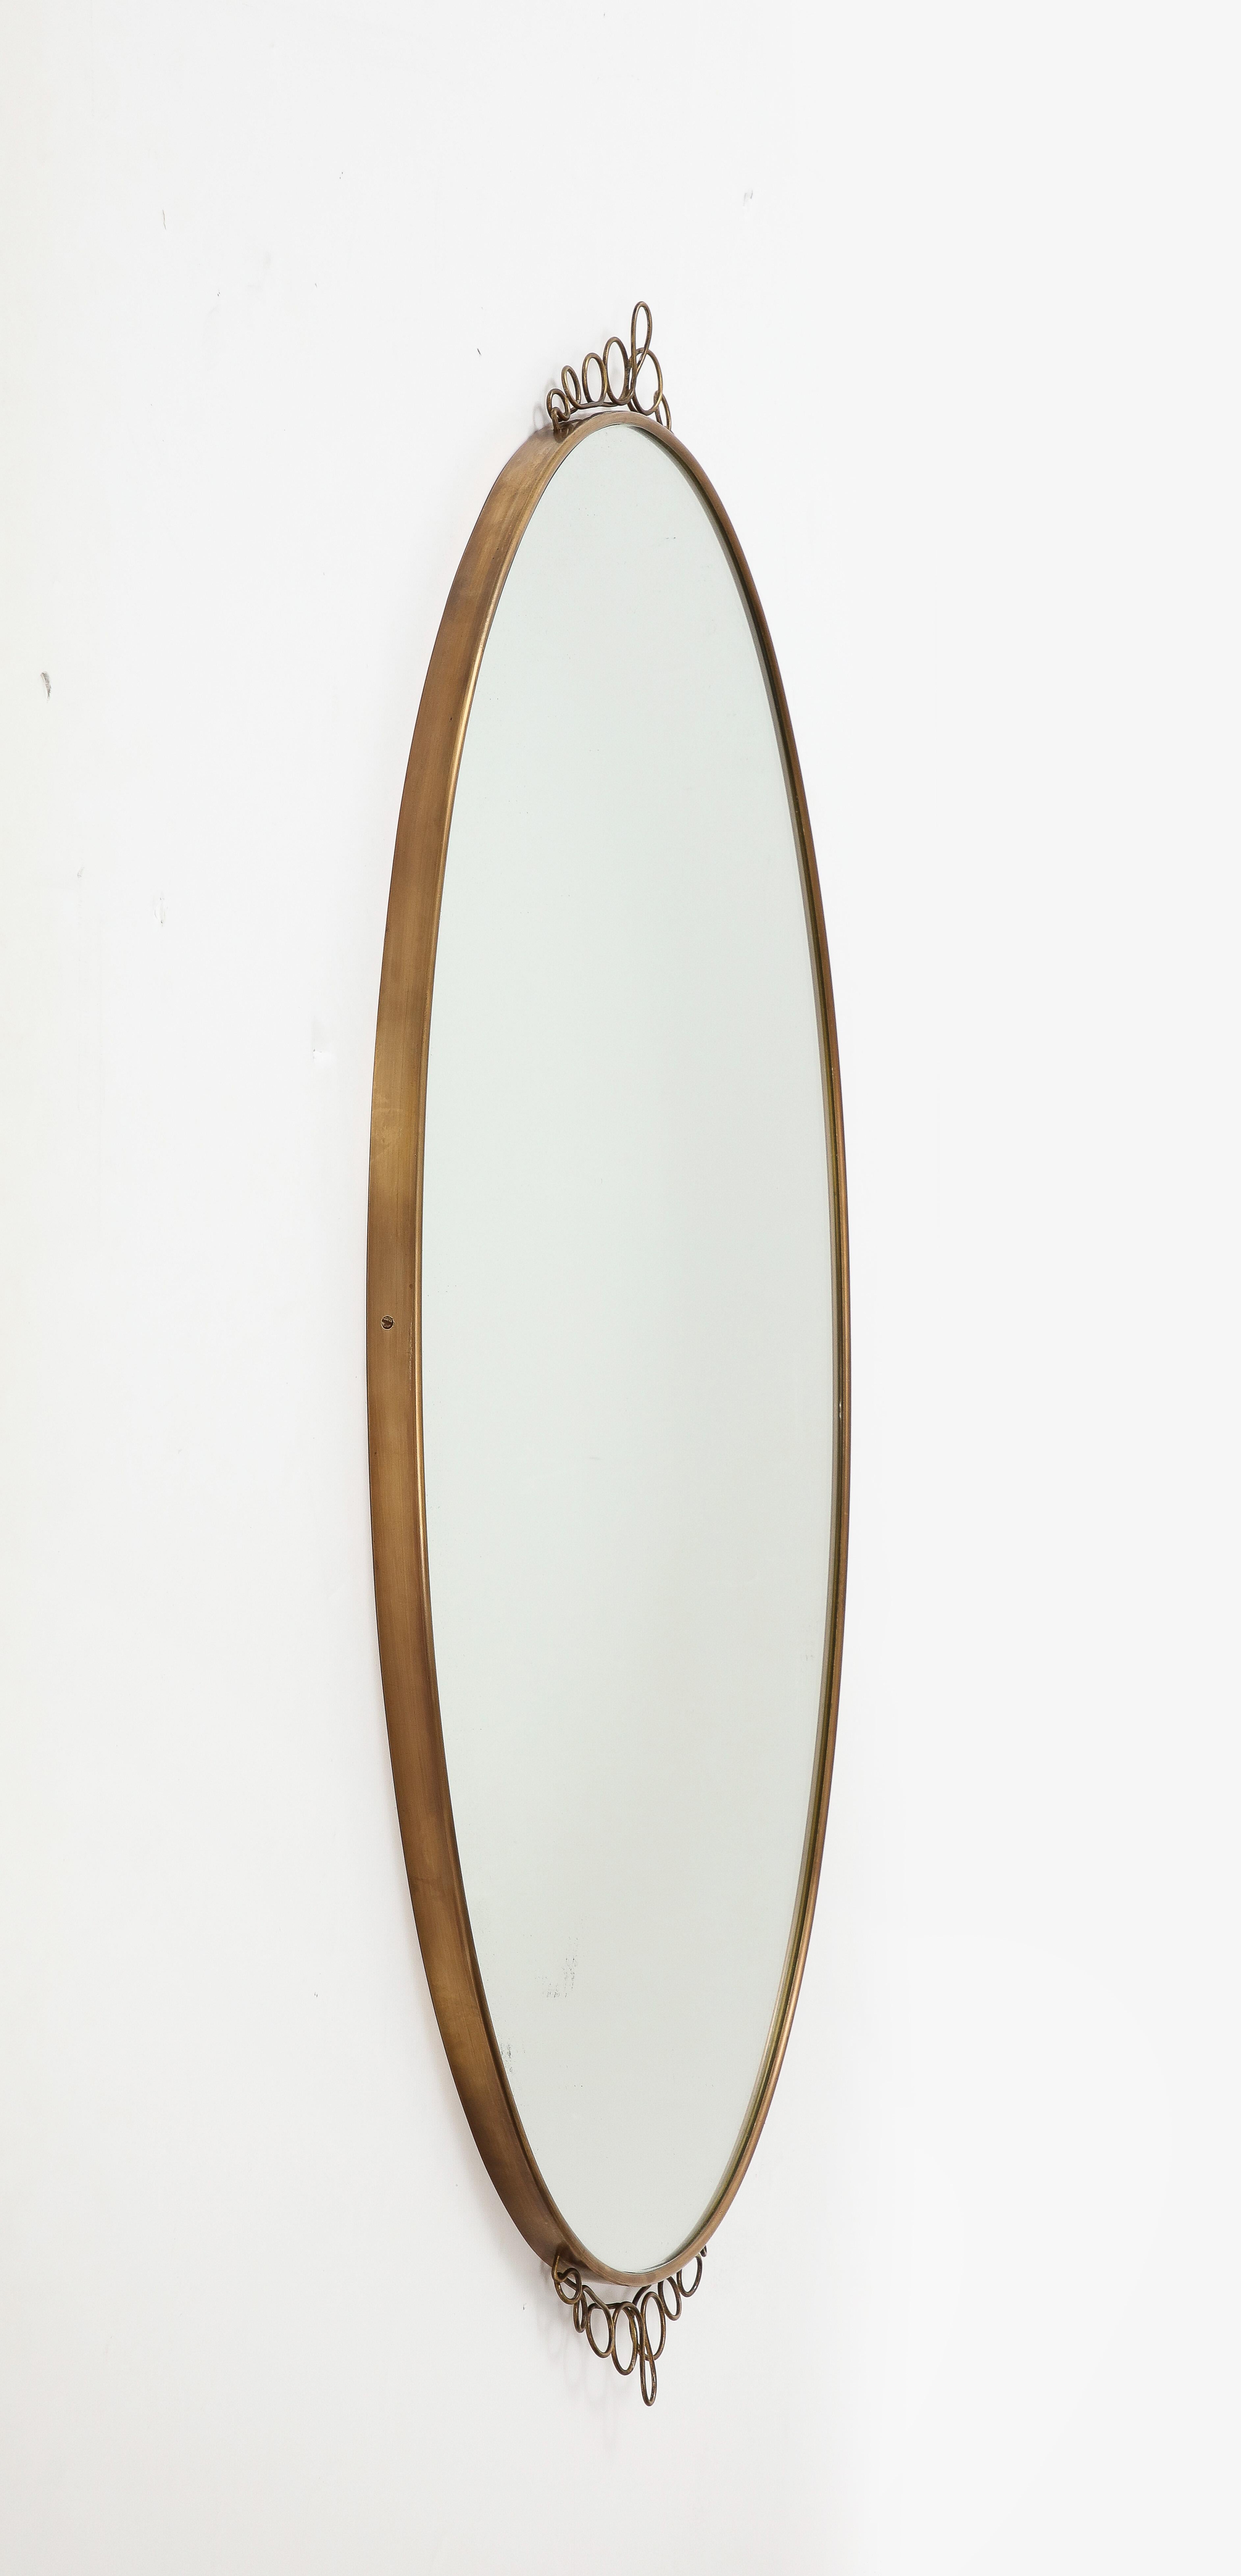 1960s Italian Modernist Oval Brass Wall Mirror with Scrolls 1